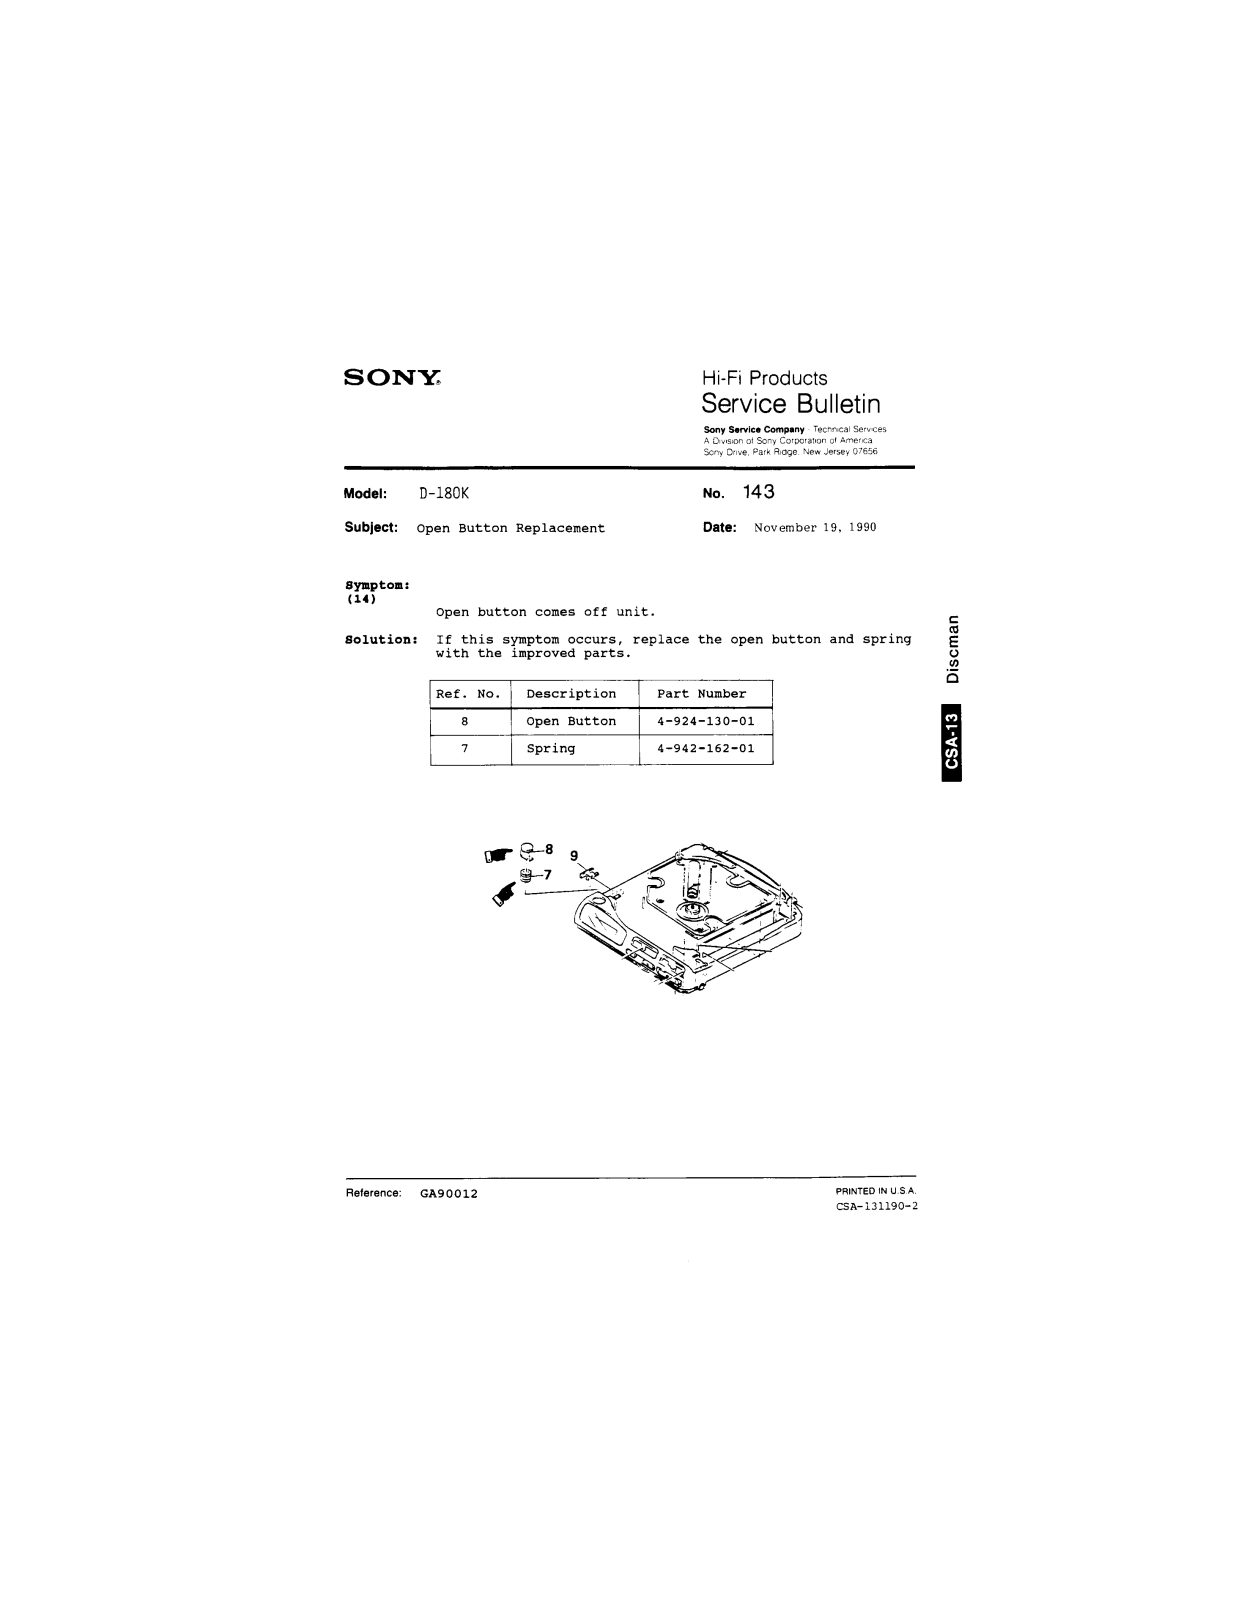 Sony D180K Service Manual